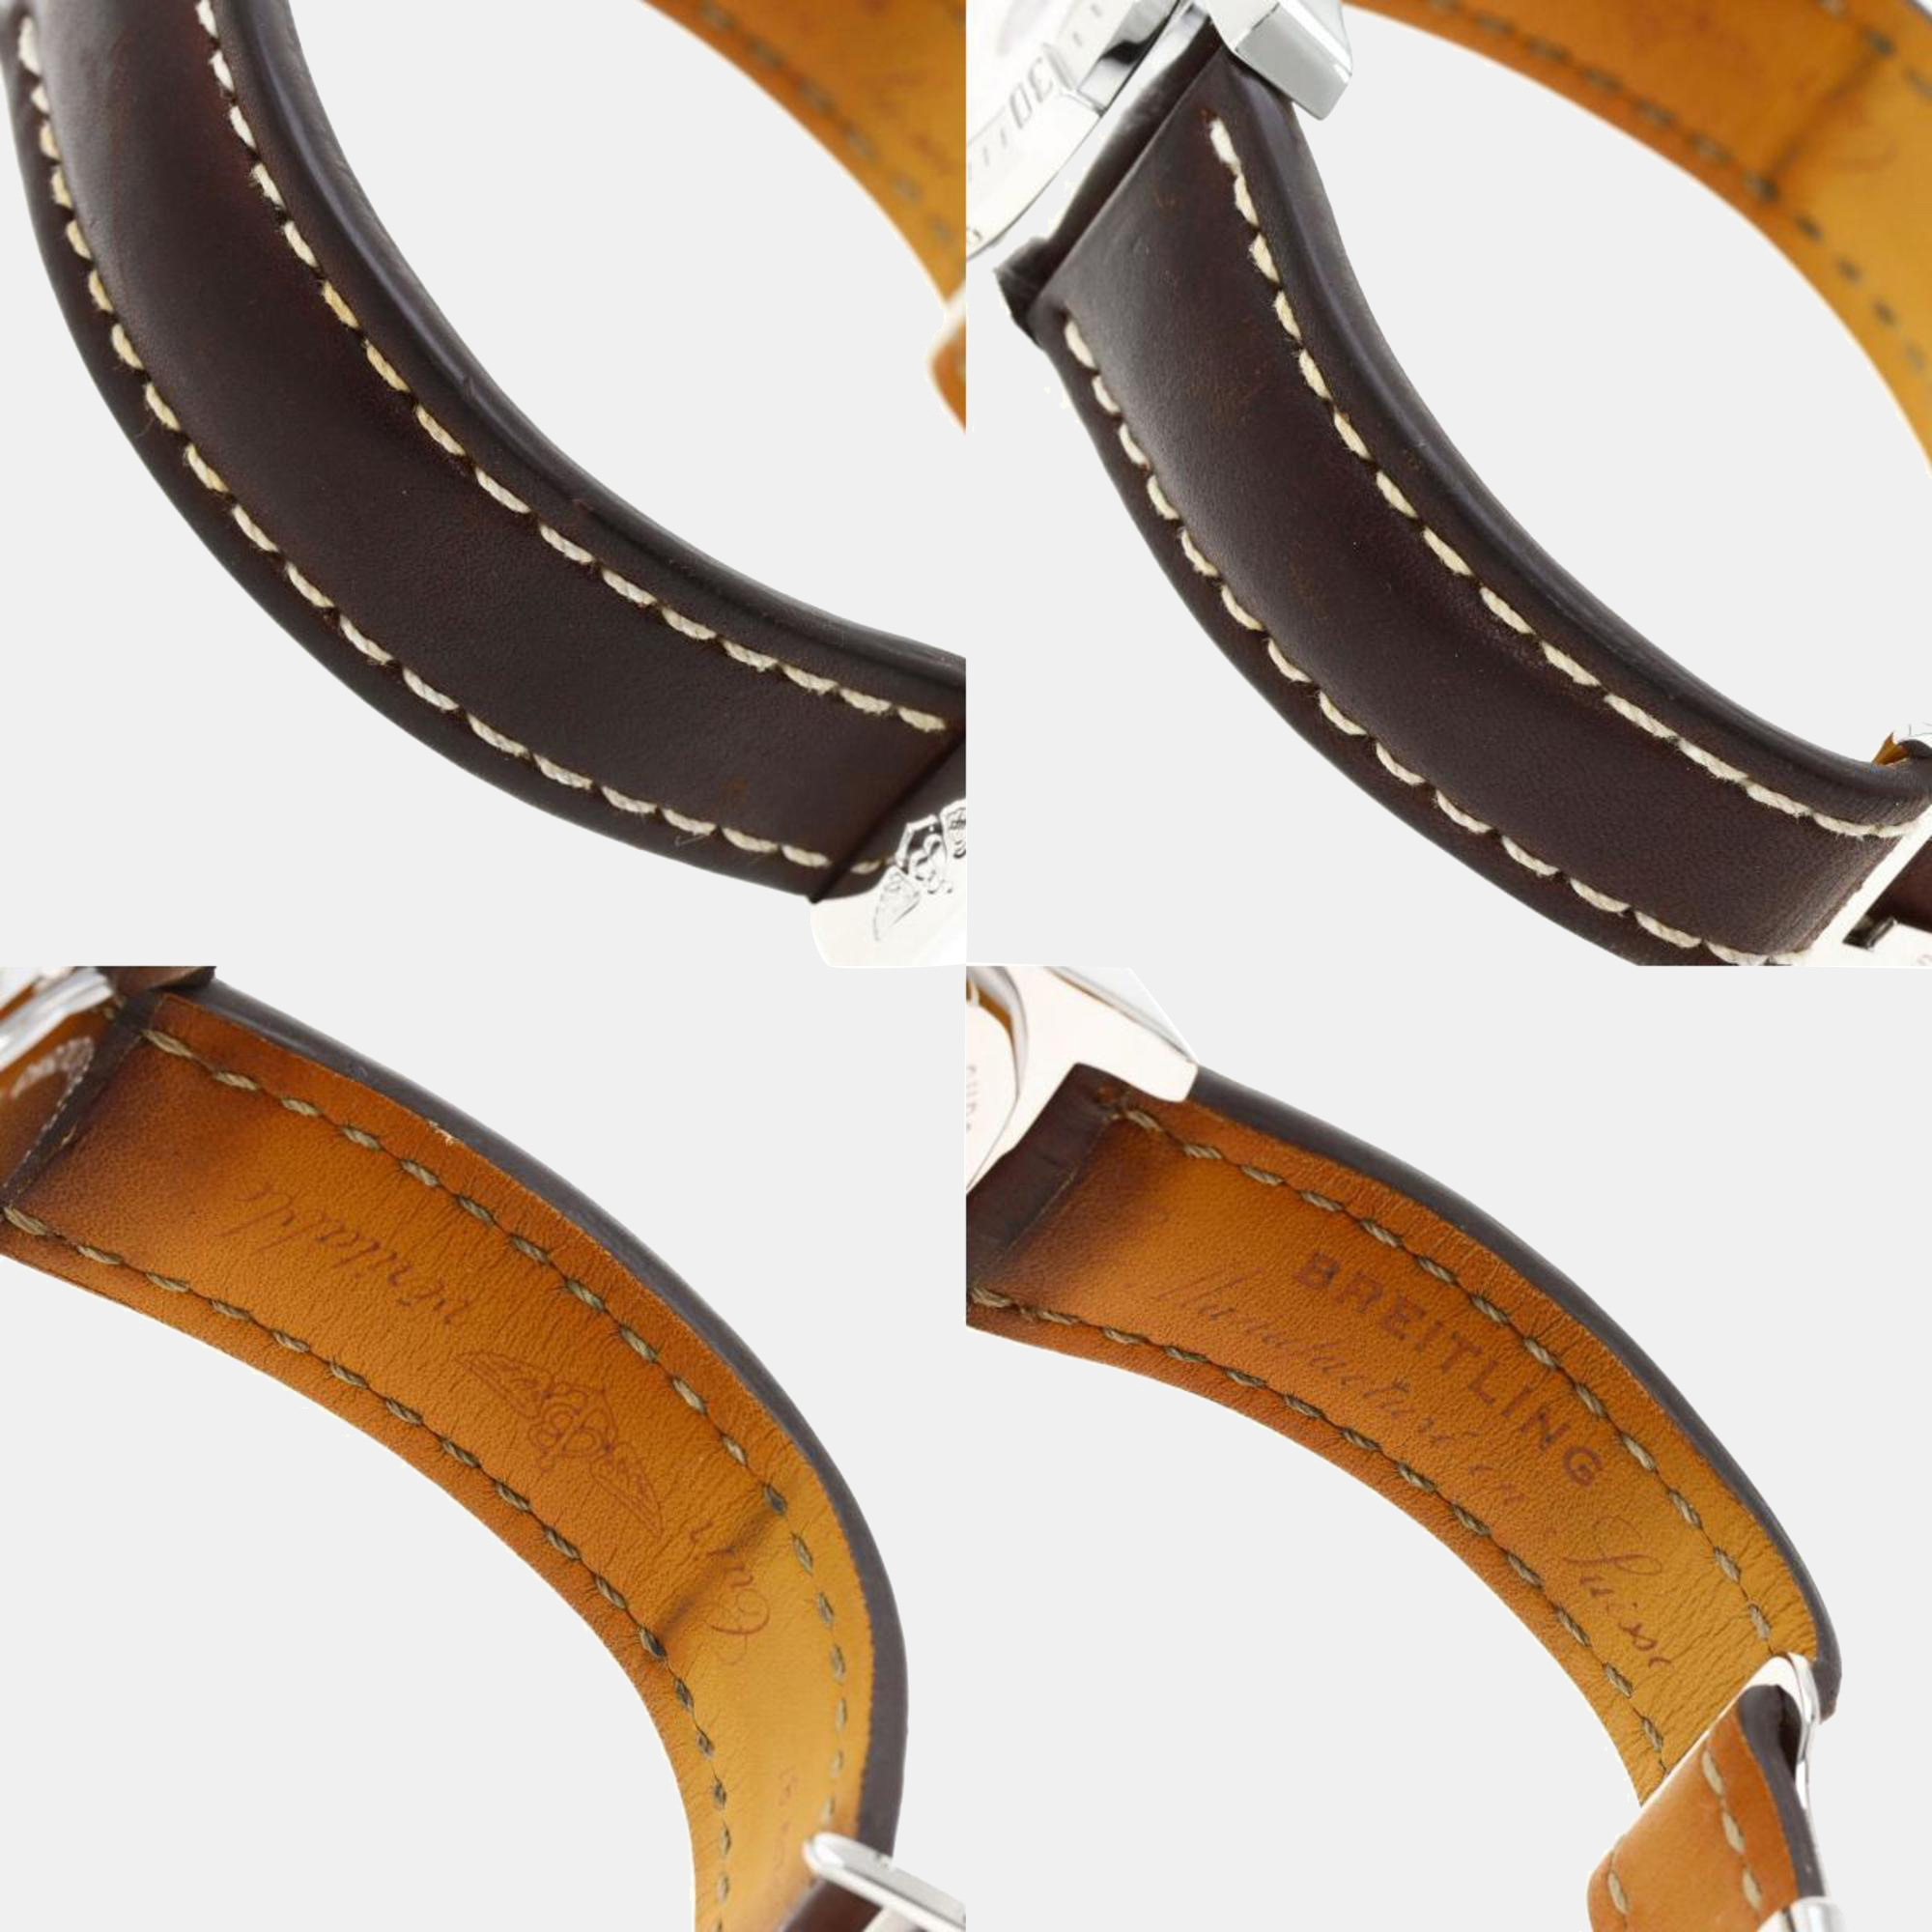 Breitling White Stainless Steel Colt  A73388 Quartz Men's Wristwatch 44 Mm